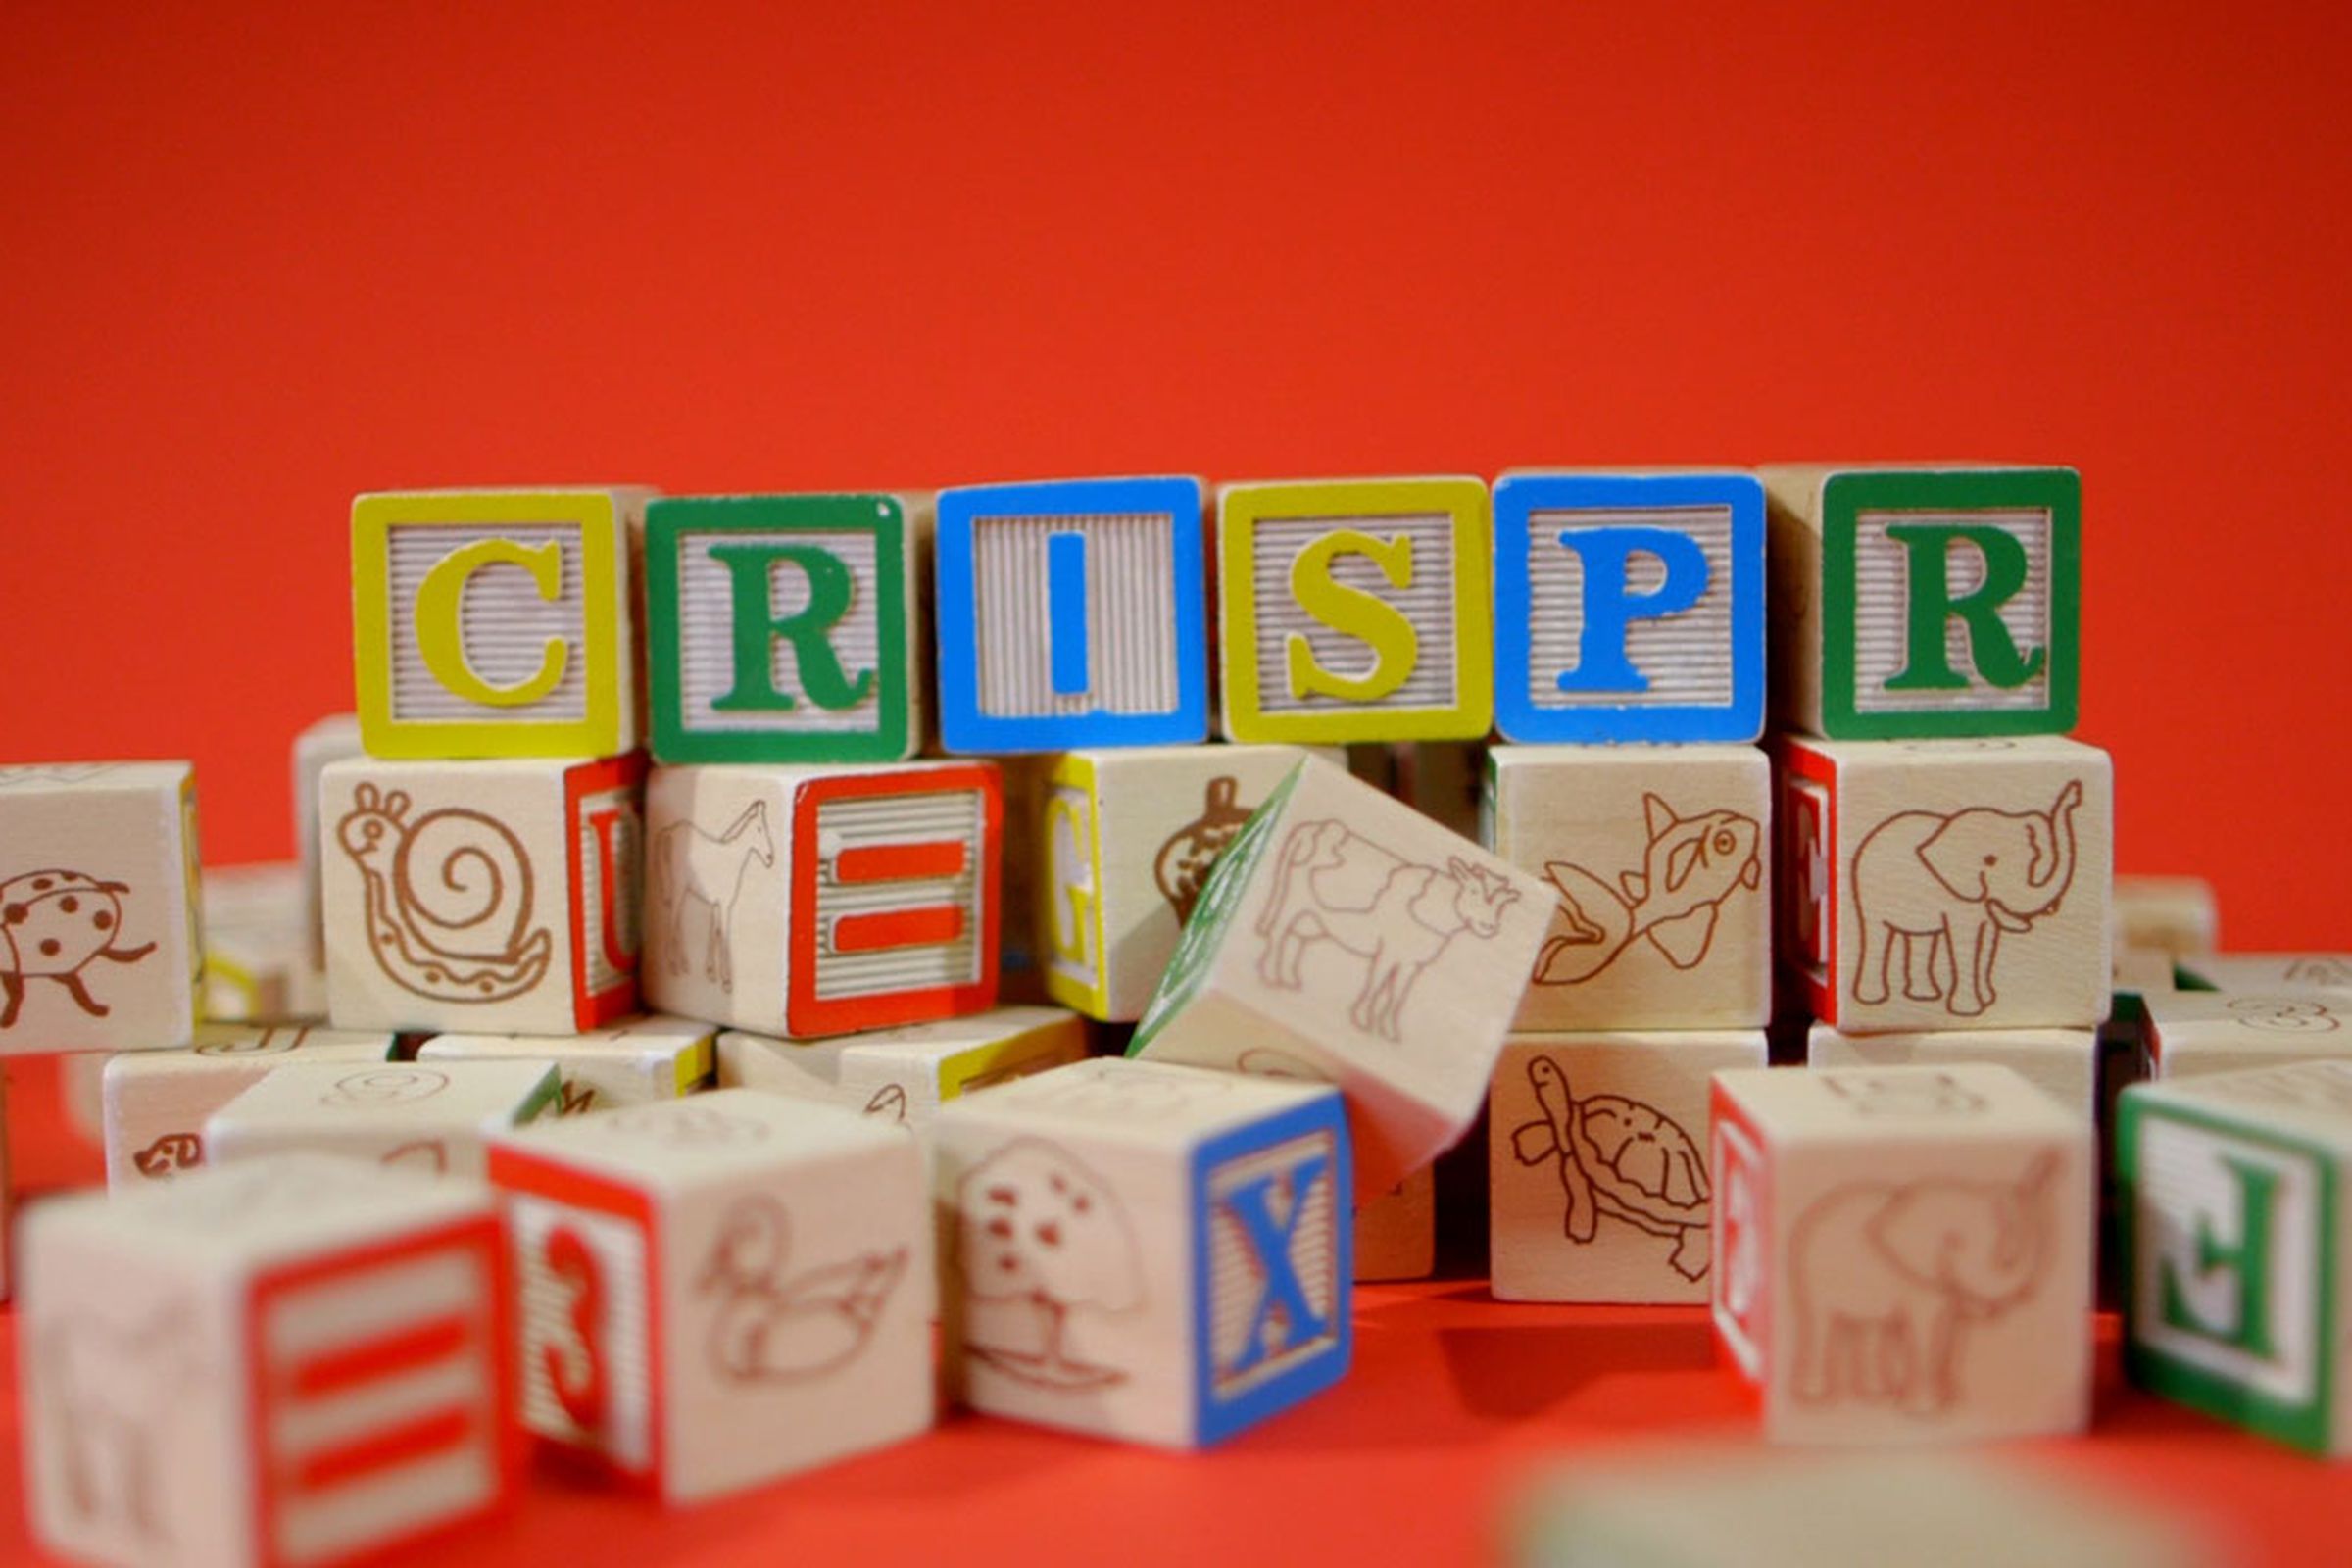 CRISPR lets scientists manipulate the building blocks of life.